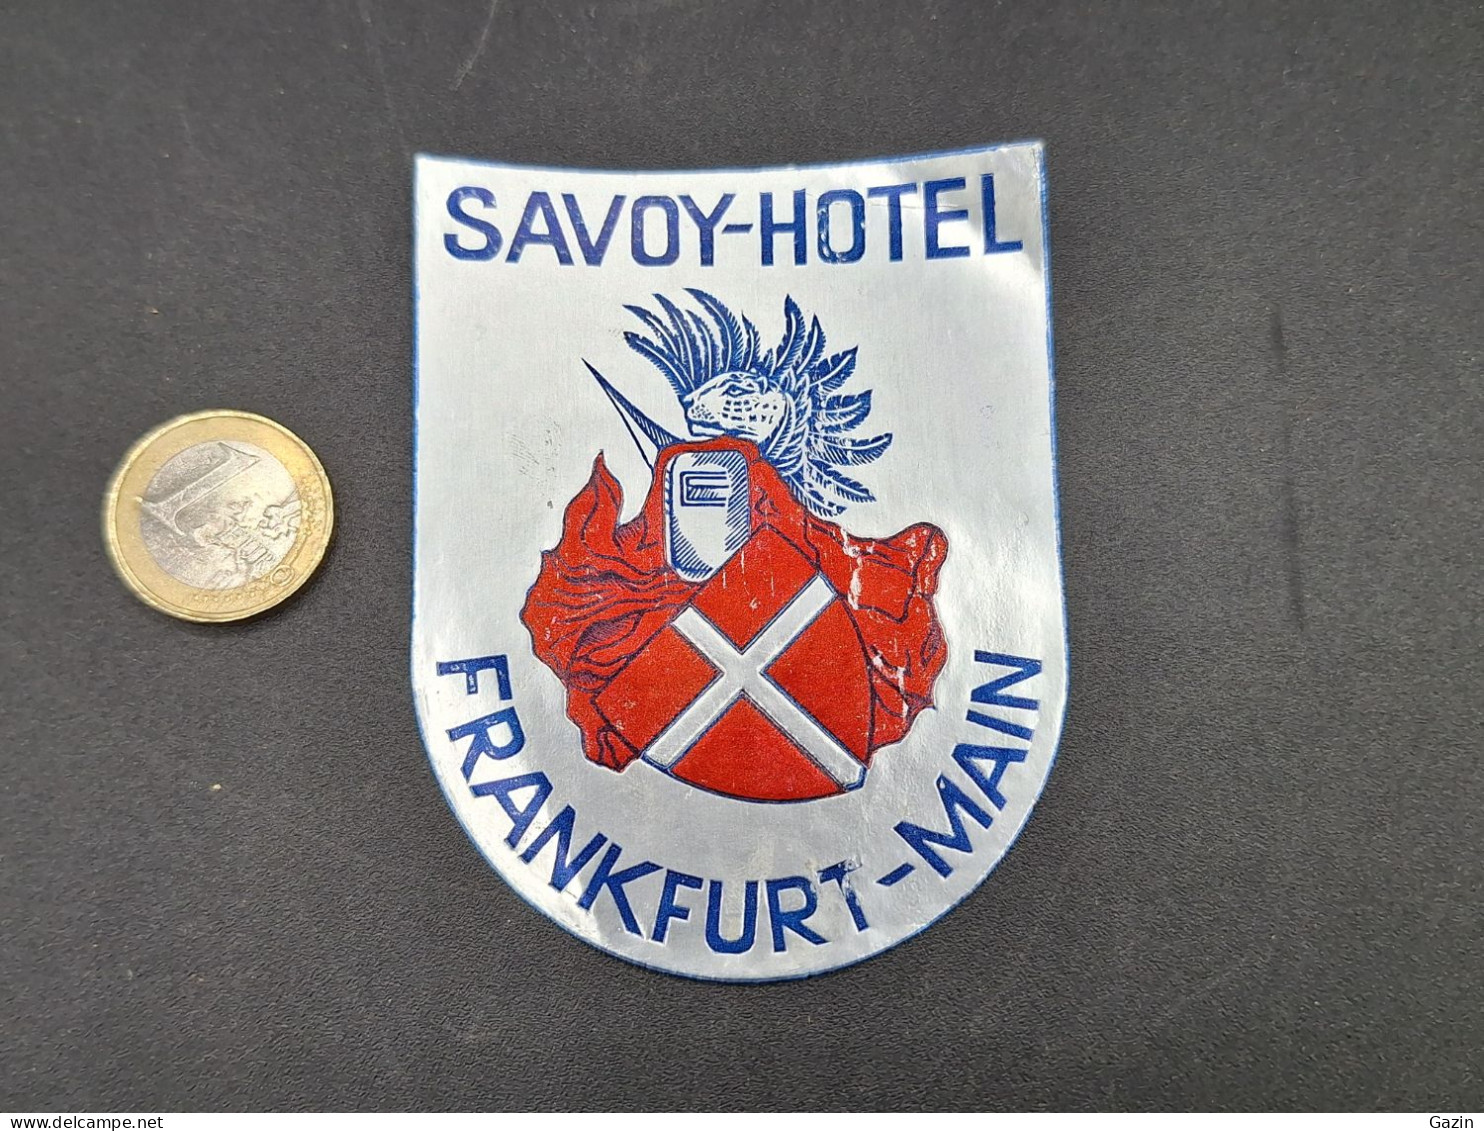 C7/3 - Hotel Savoy * Frankfurt - Main * Germany *  Luggage Lable * Rótulo * Etiqueta - Adesivi Di Alberghi